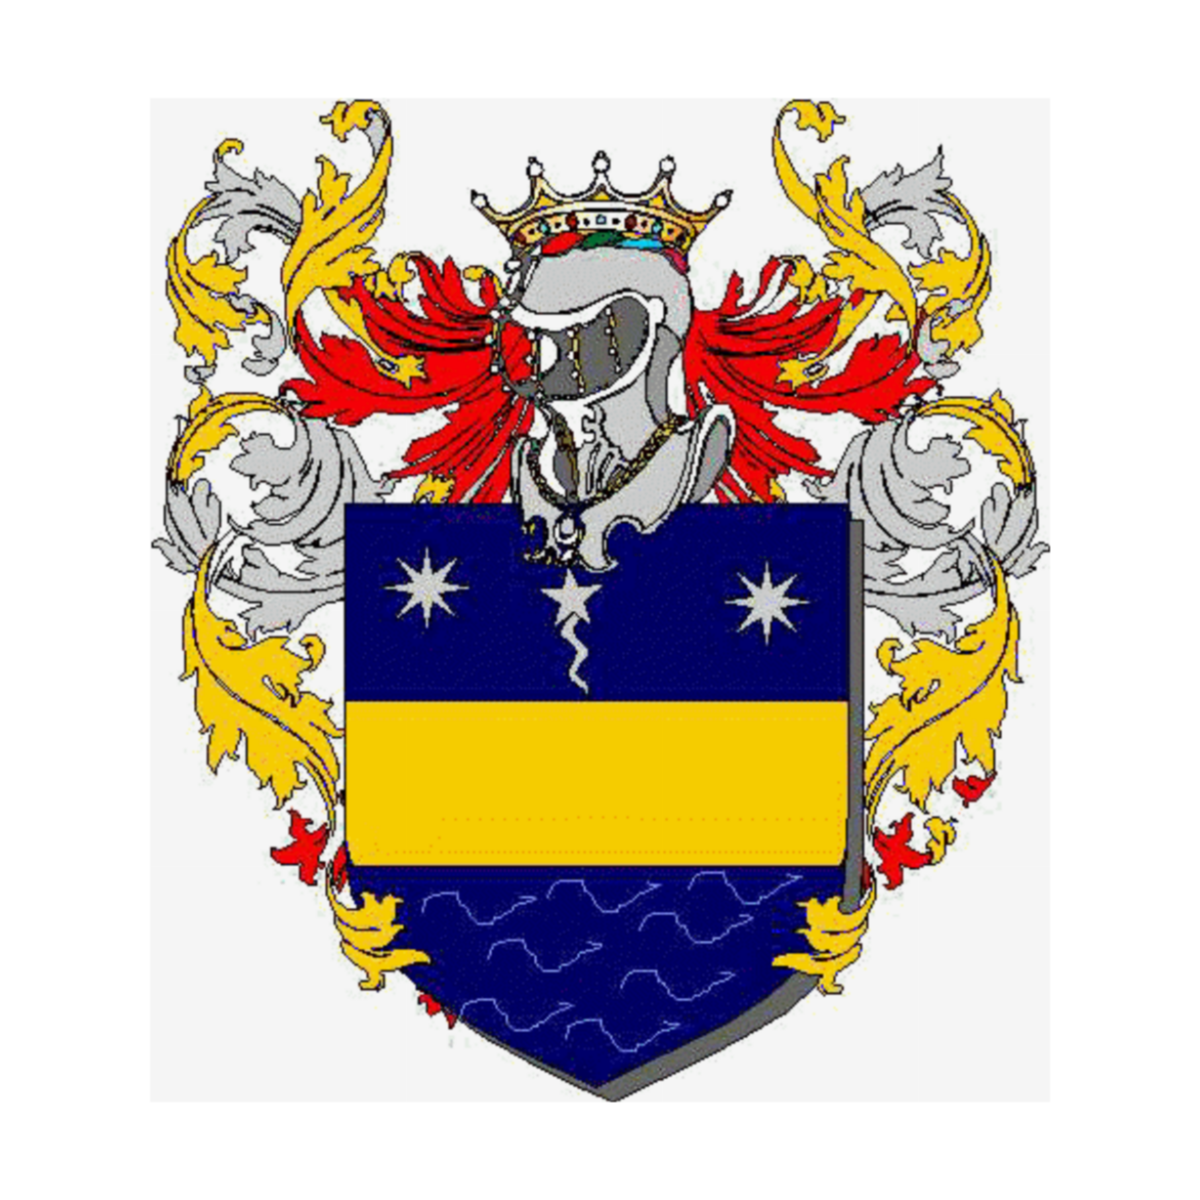 Wappen der Familieciofi, de Biagio